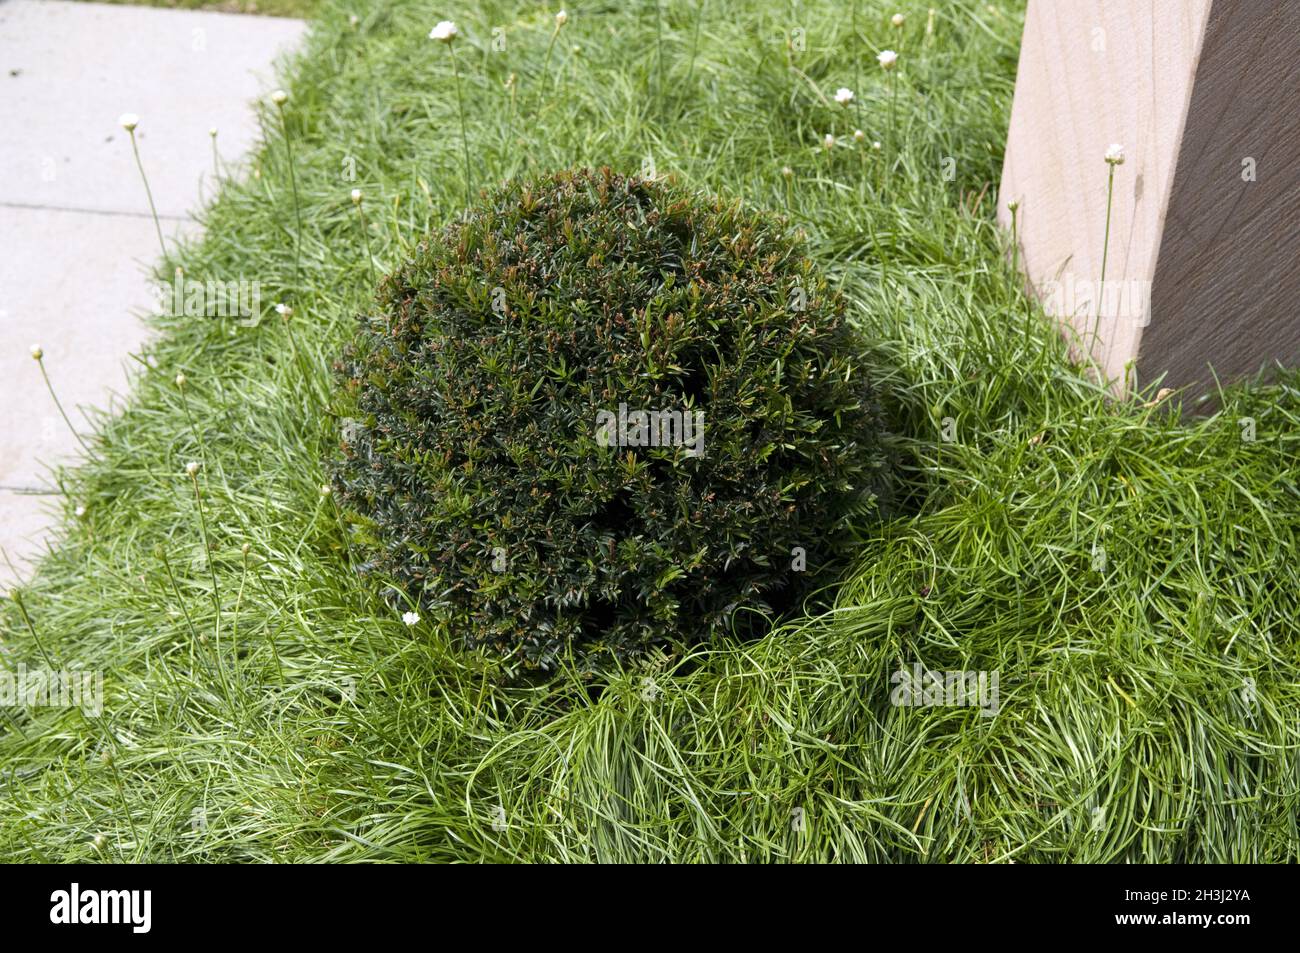 Grave planting, grass carnation, armeria, Stock Photo